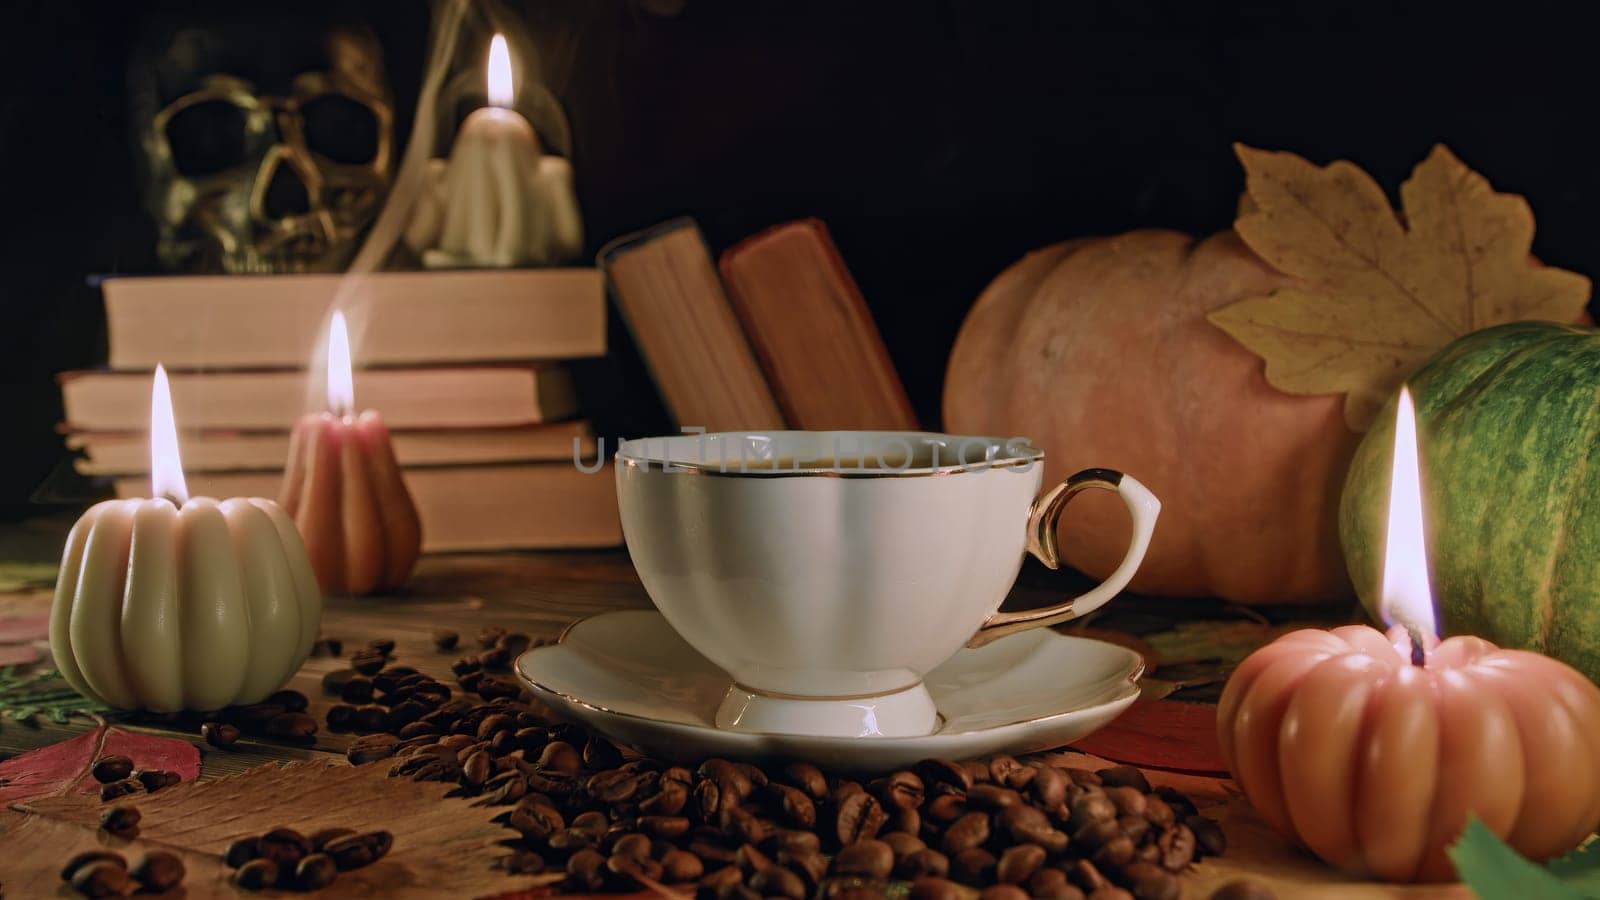 Comforting charm, autumn coffee scene. Nostalgic, retro allure. Candles flicker. by kristina_kokhanova